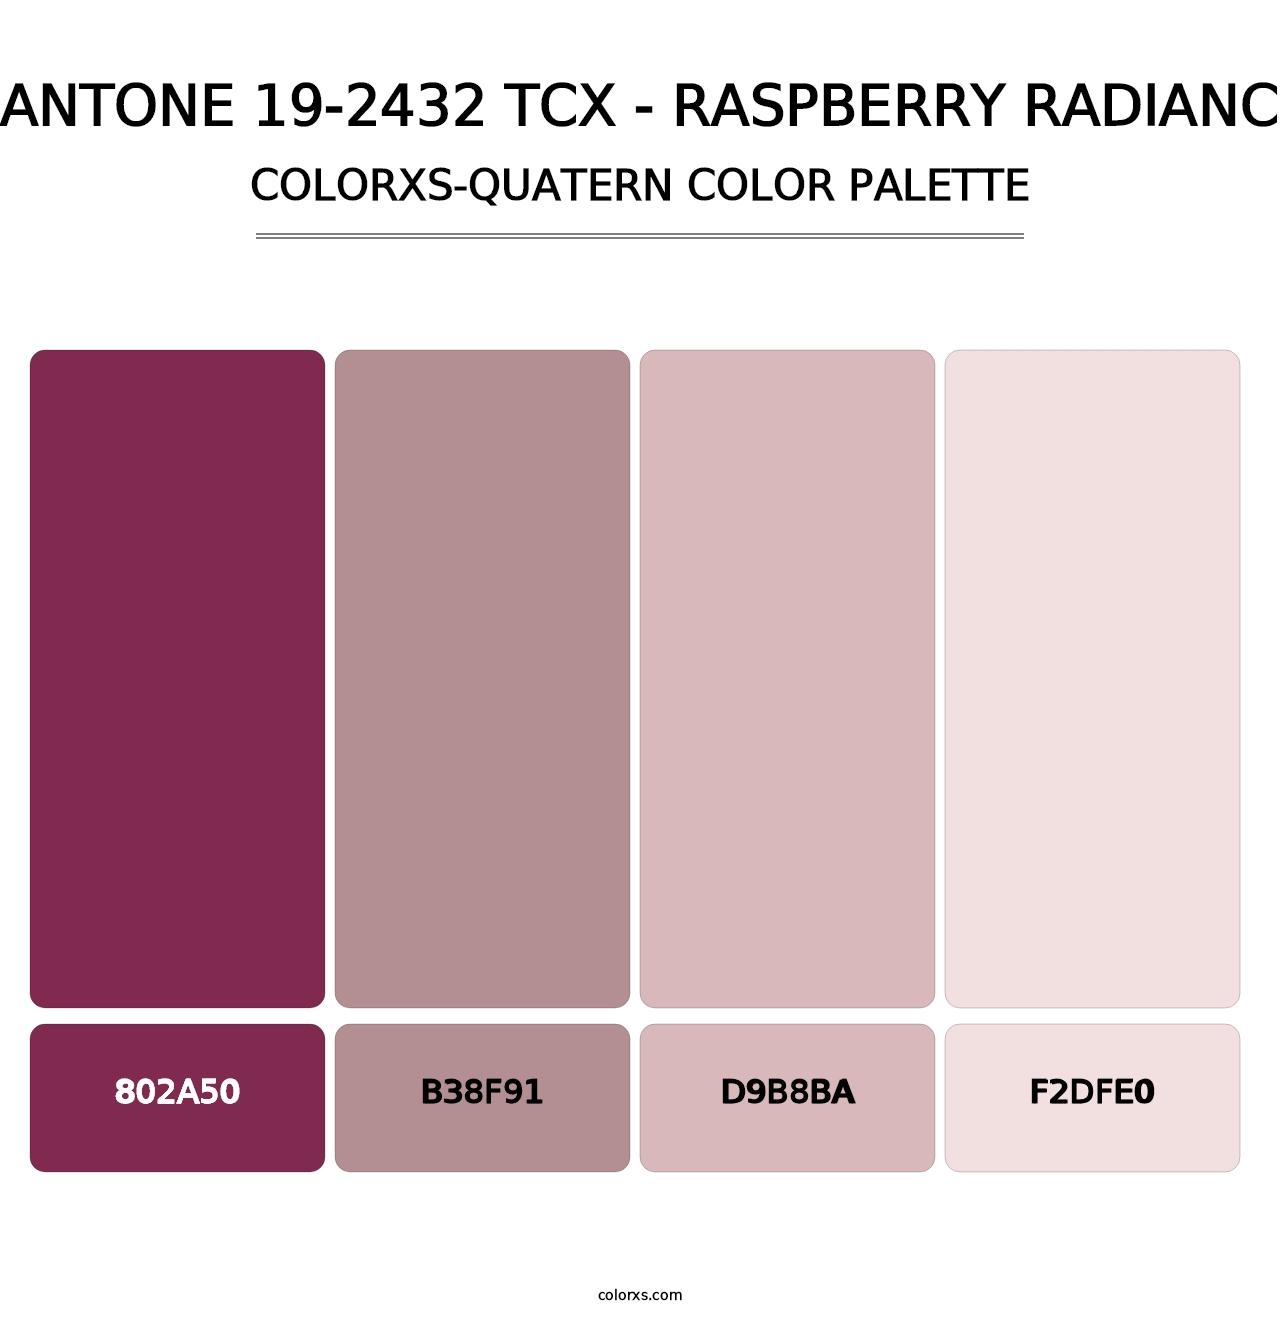 PANTONE 19-2432 TCX - Raspberry Radiance - Colorxs Quatern Palette